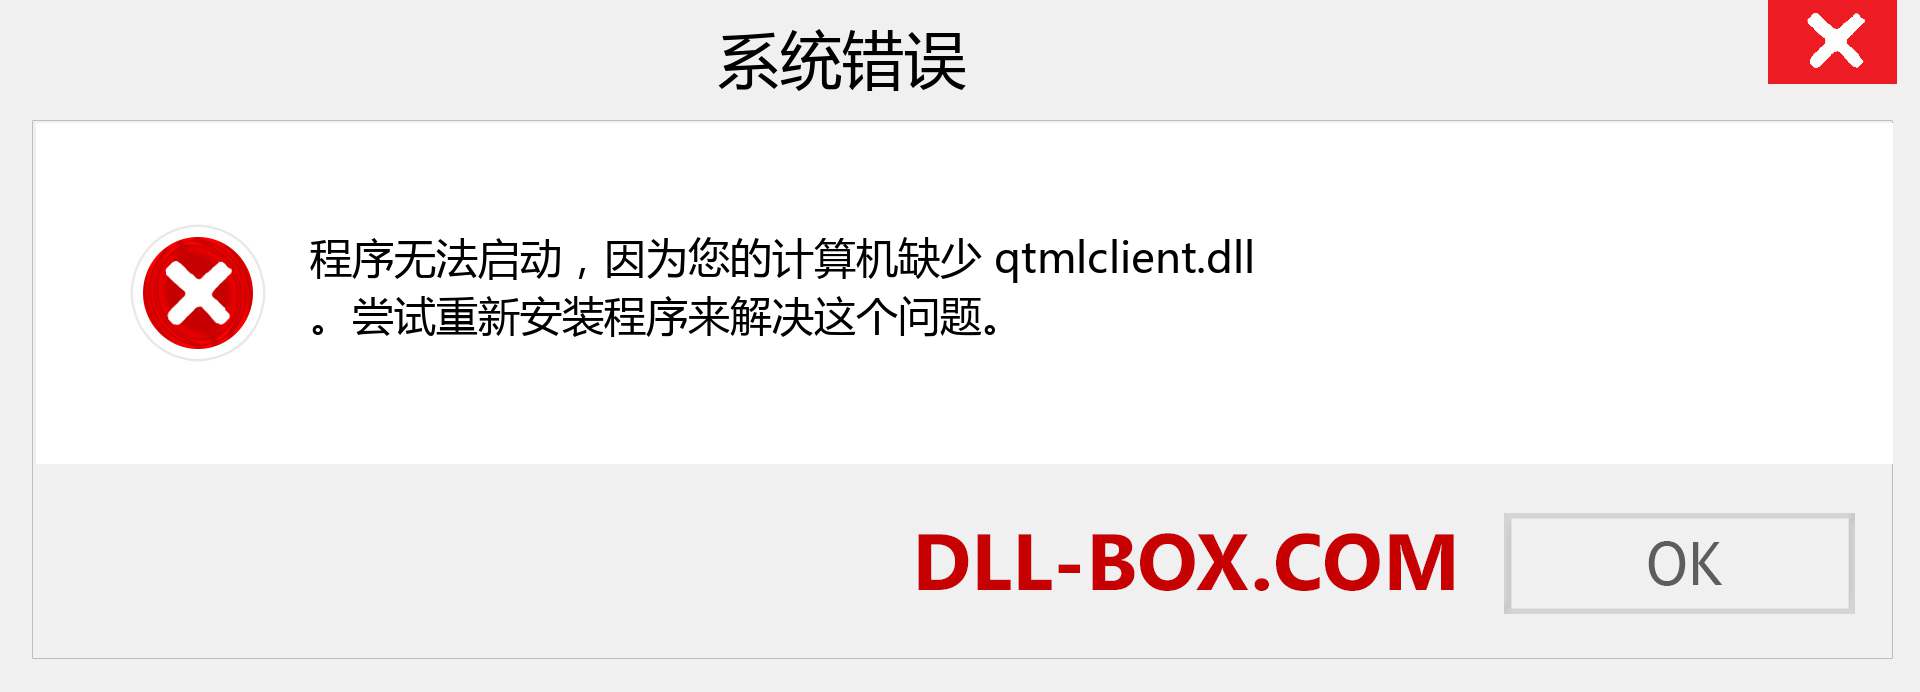 qtmlclient.dll 文件丢失？。 适用于 Windows 7、8、10 的下载 - 修复 Windows、照片、图像上的 qtmlclient dll 丢失错误